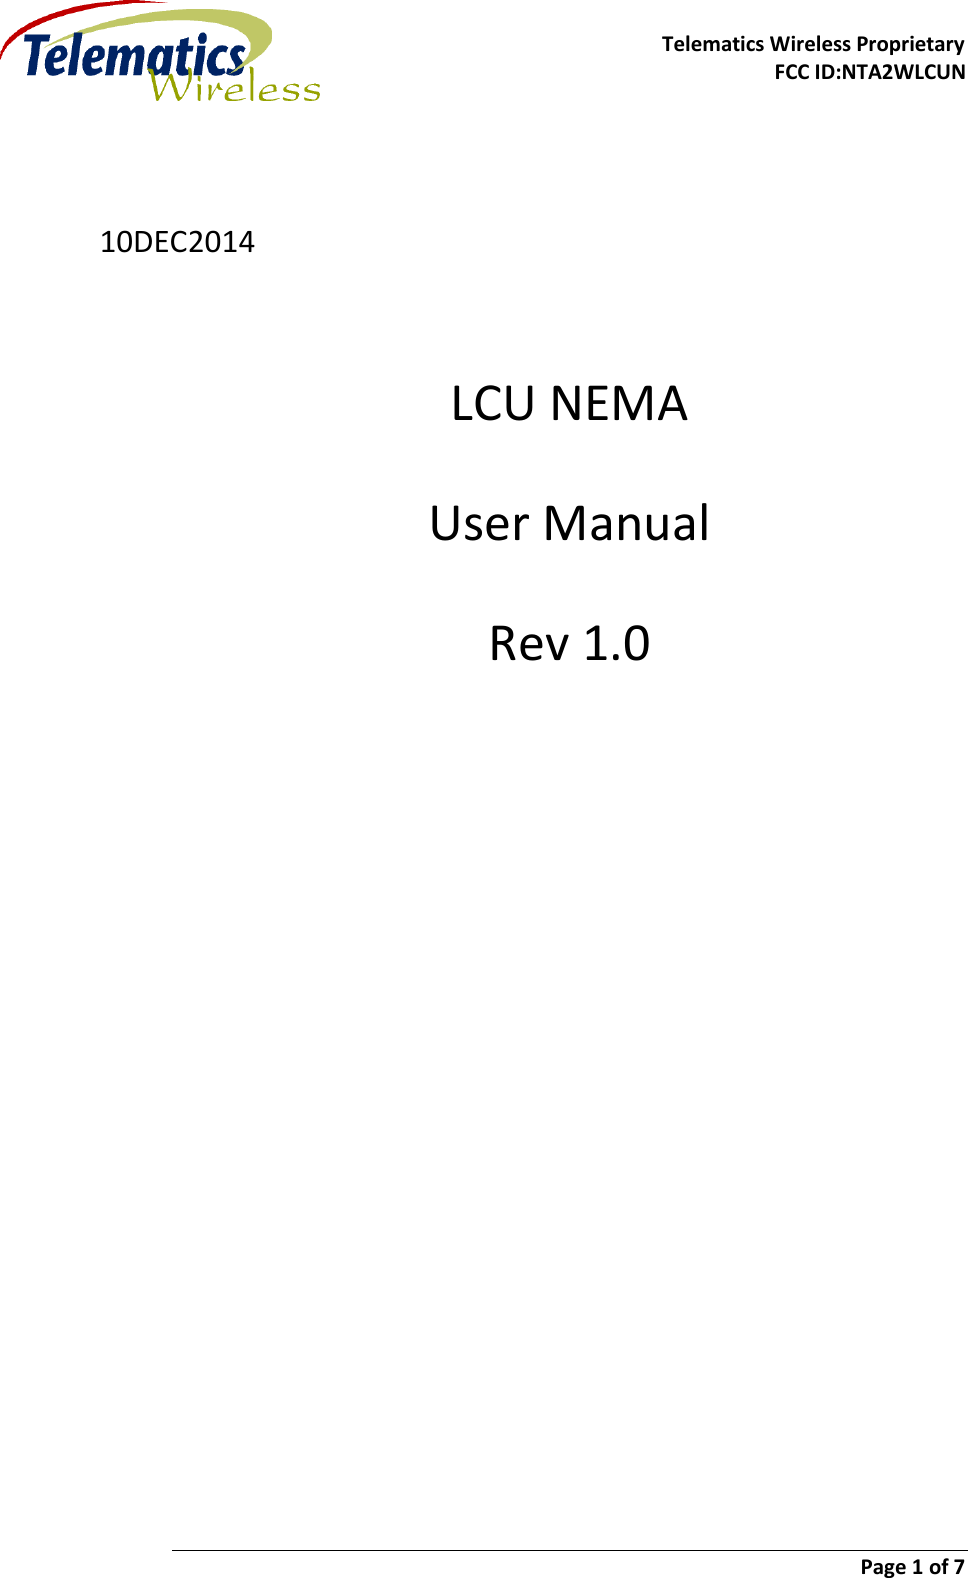     Telematics Wireless Proprietary FCC ID:NTA2WLCUN                        Page 1 of 7    10DEC2014  LCU NEMA  User Manual Rev 1.0    